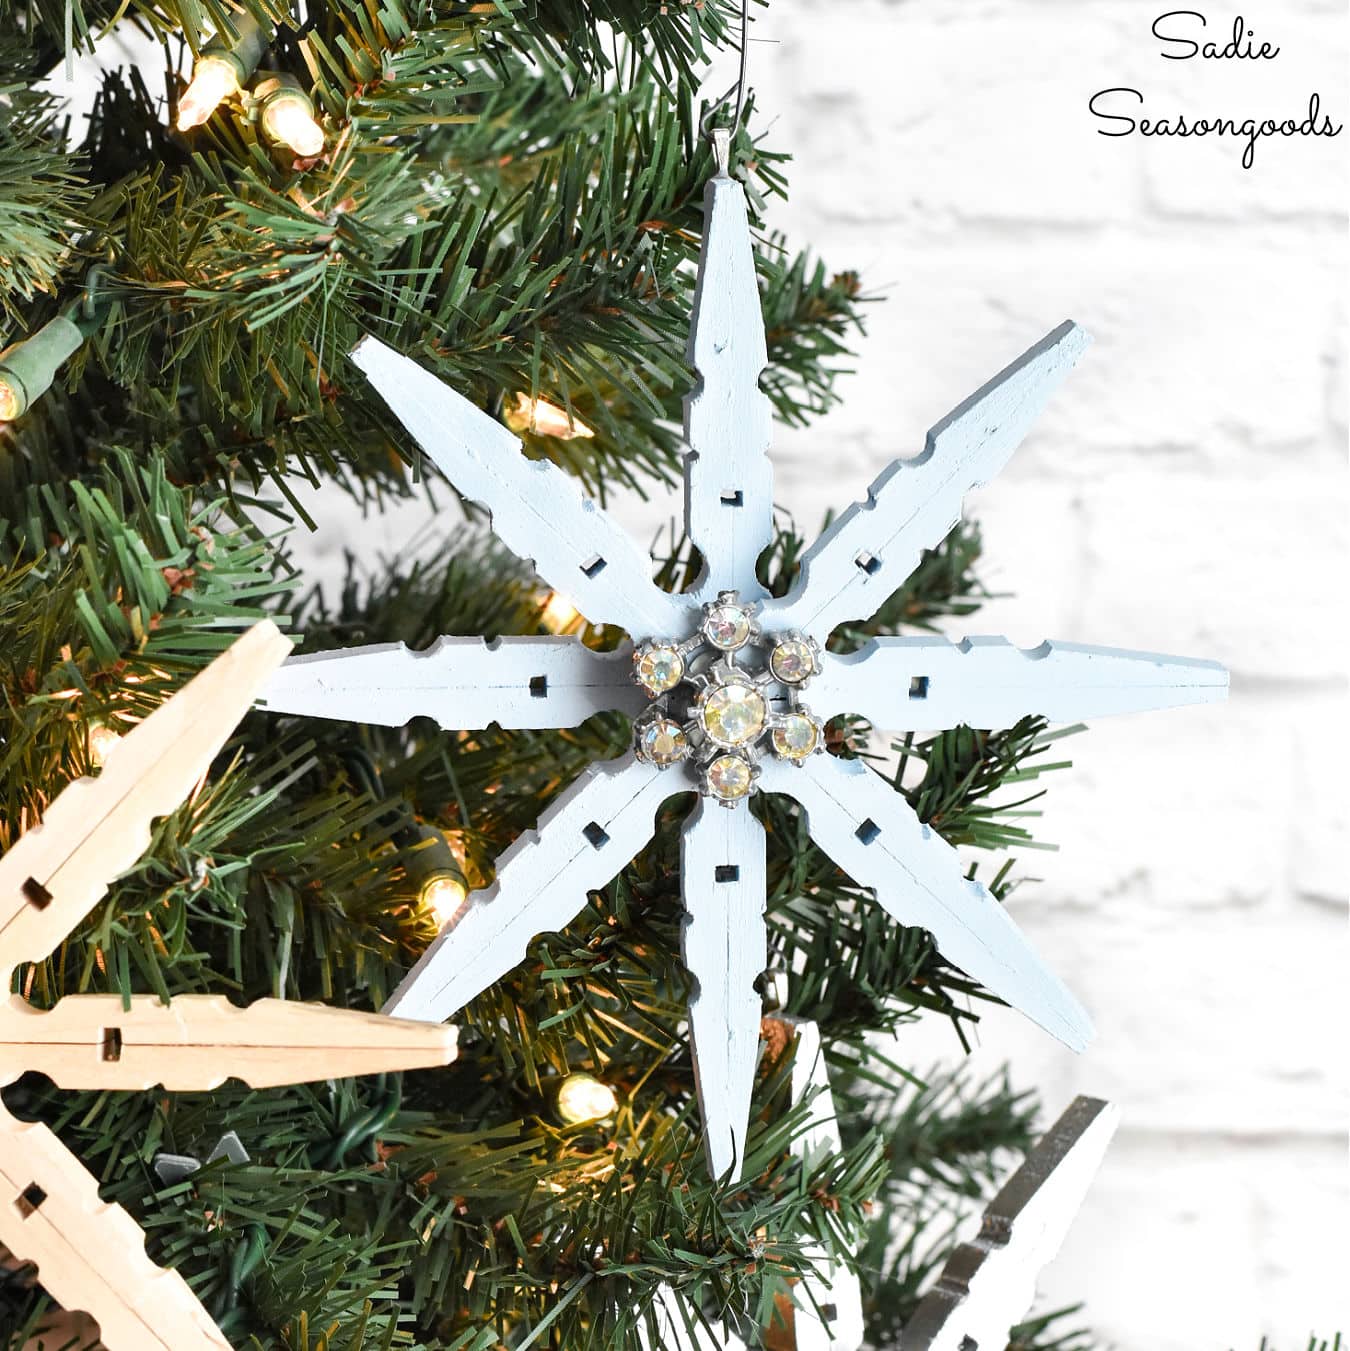 12 Pcs Christmas Wooden Snowflake Tree Ornaments Wreath Vintage